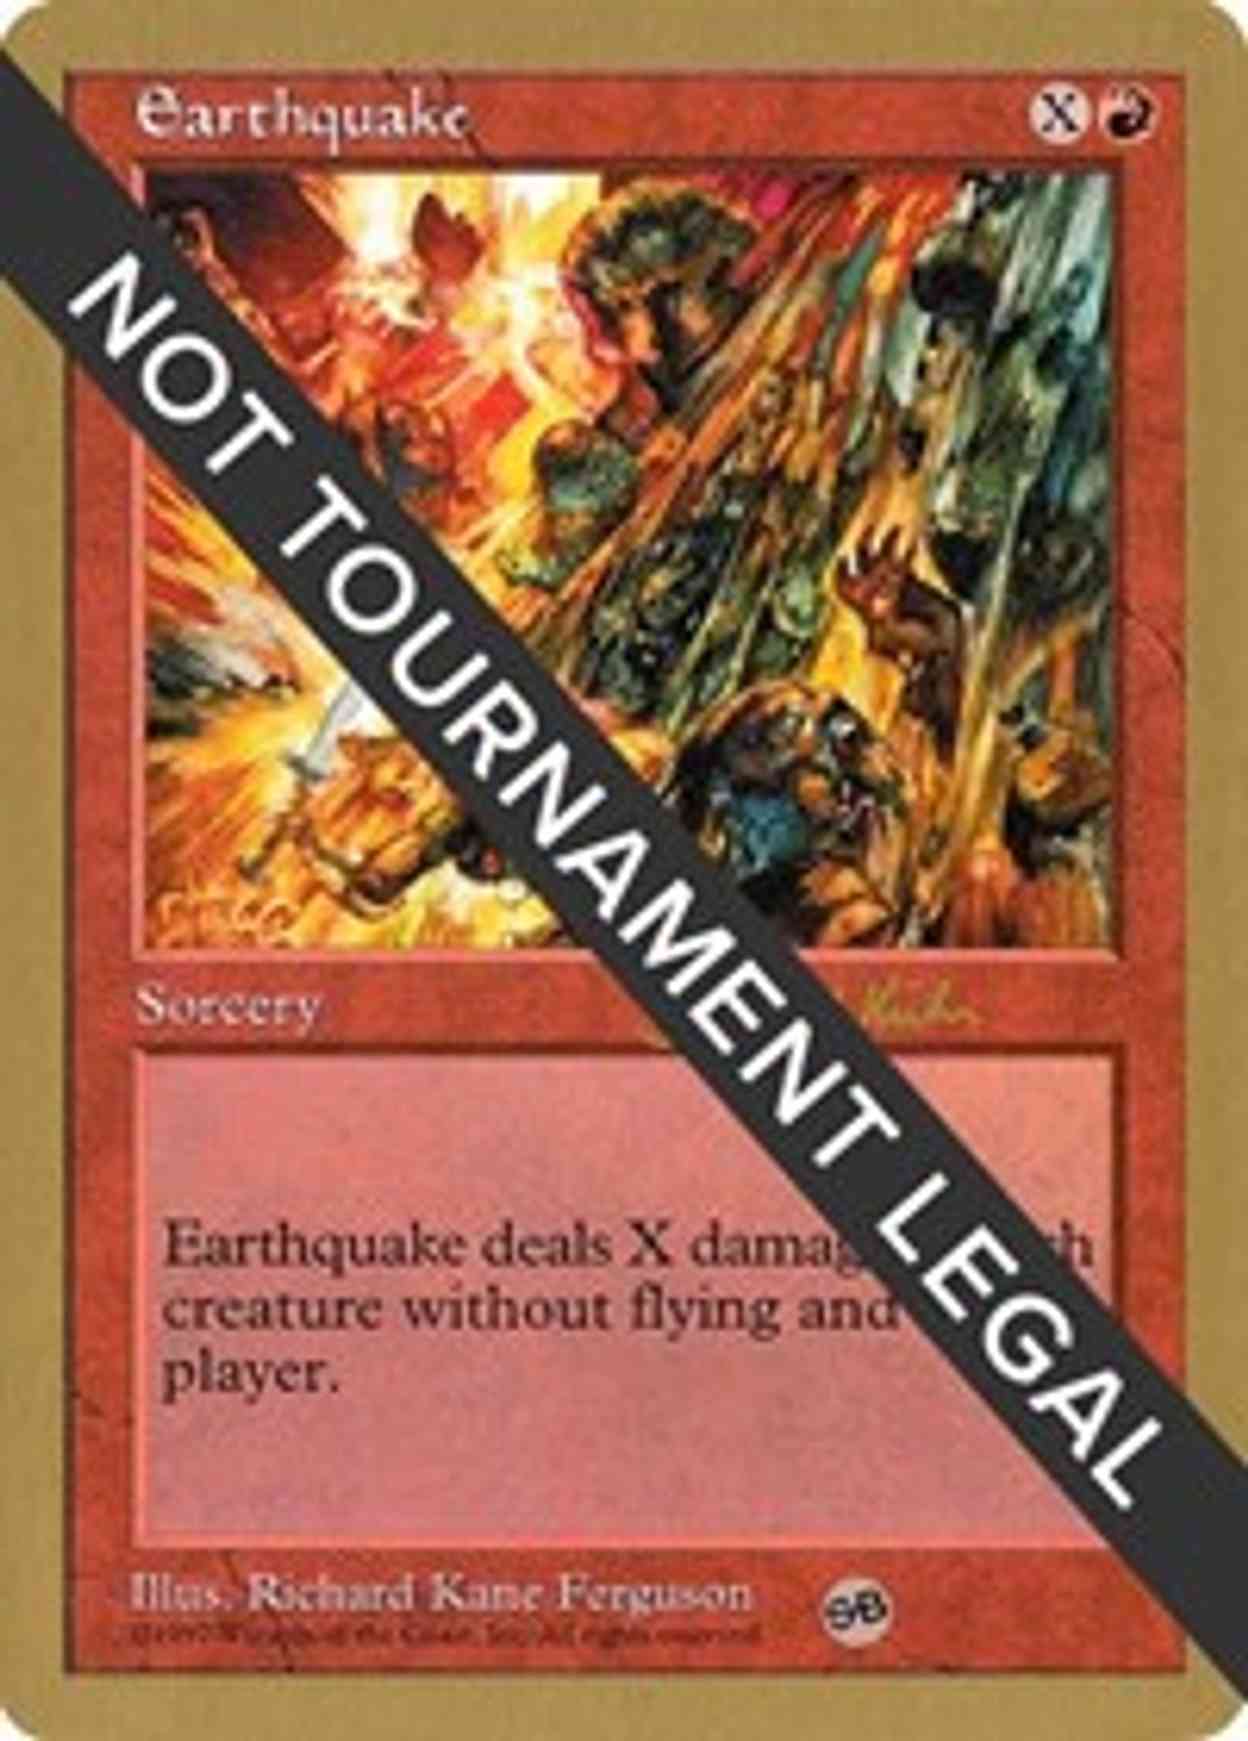 Earthquake - 1997 Janosch Kuhn (5ED) (SB) magic card front